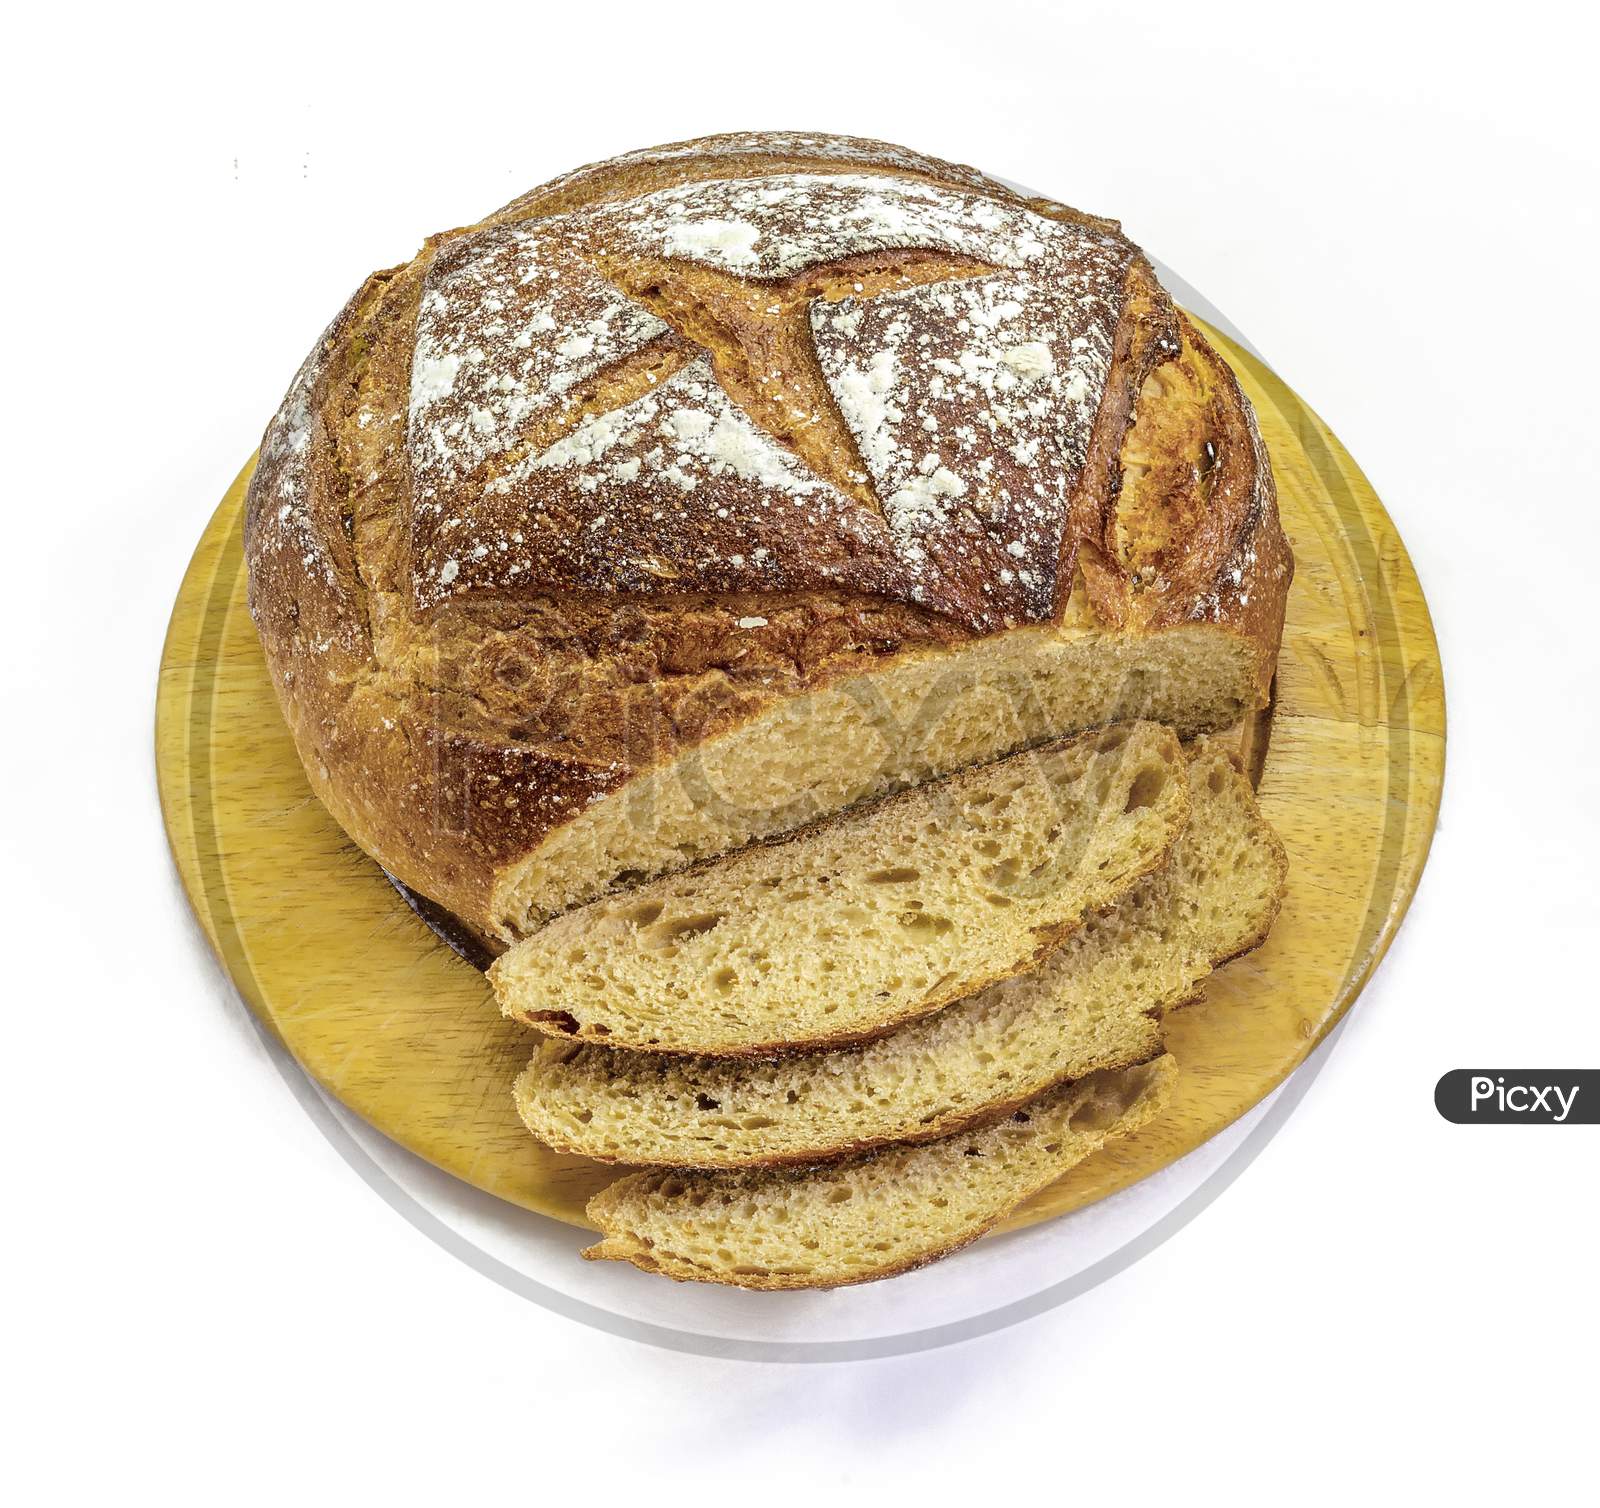 Sourdough bread on a bread board on a white background